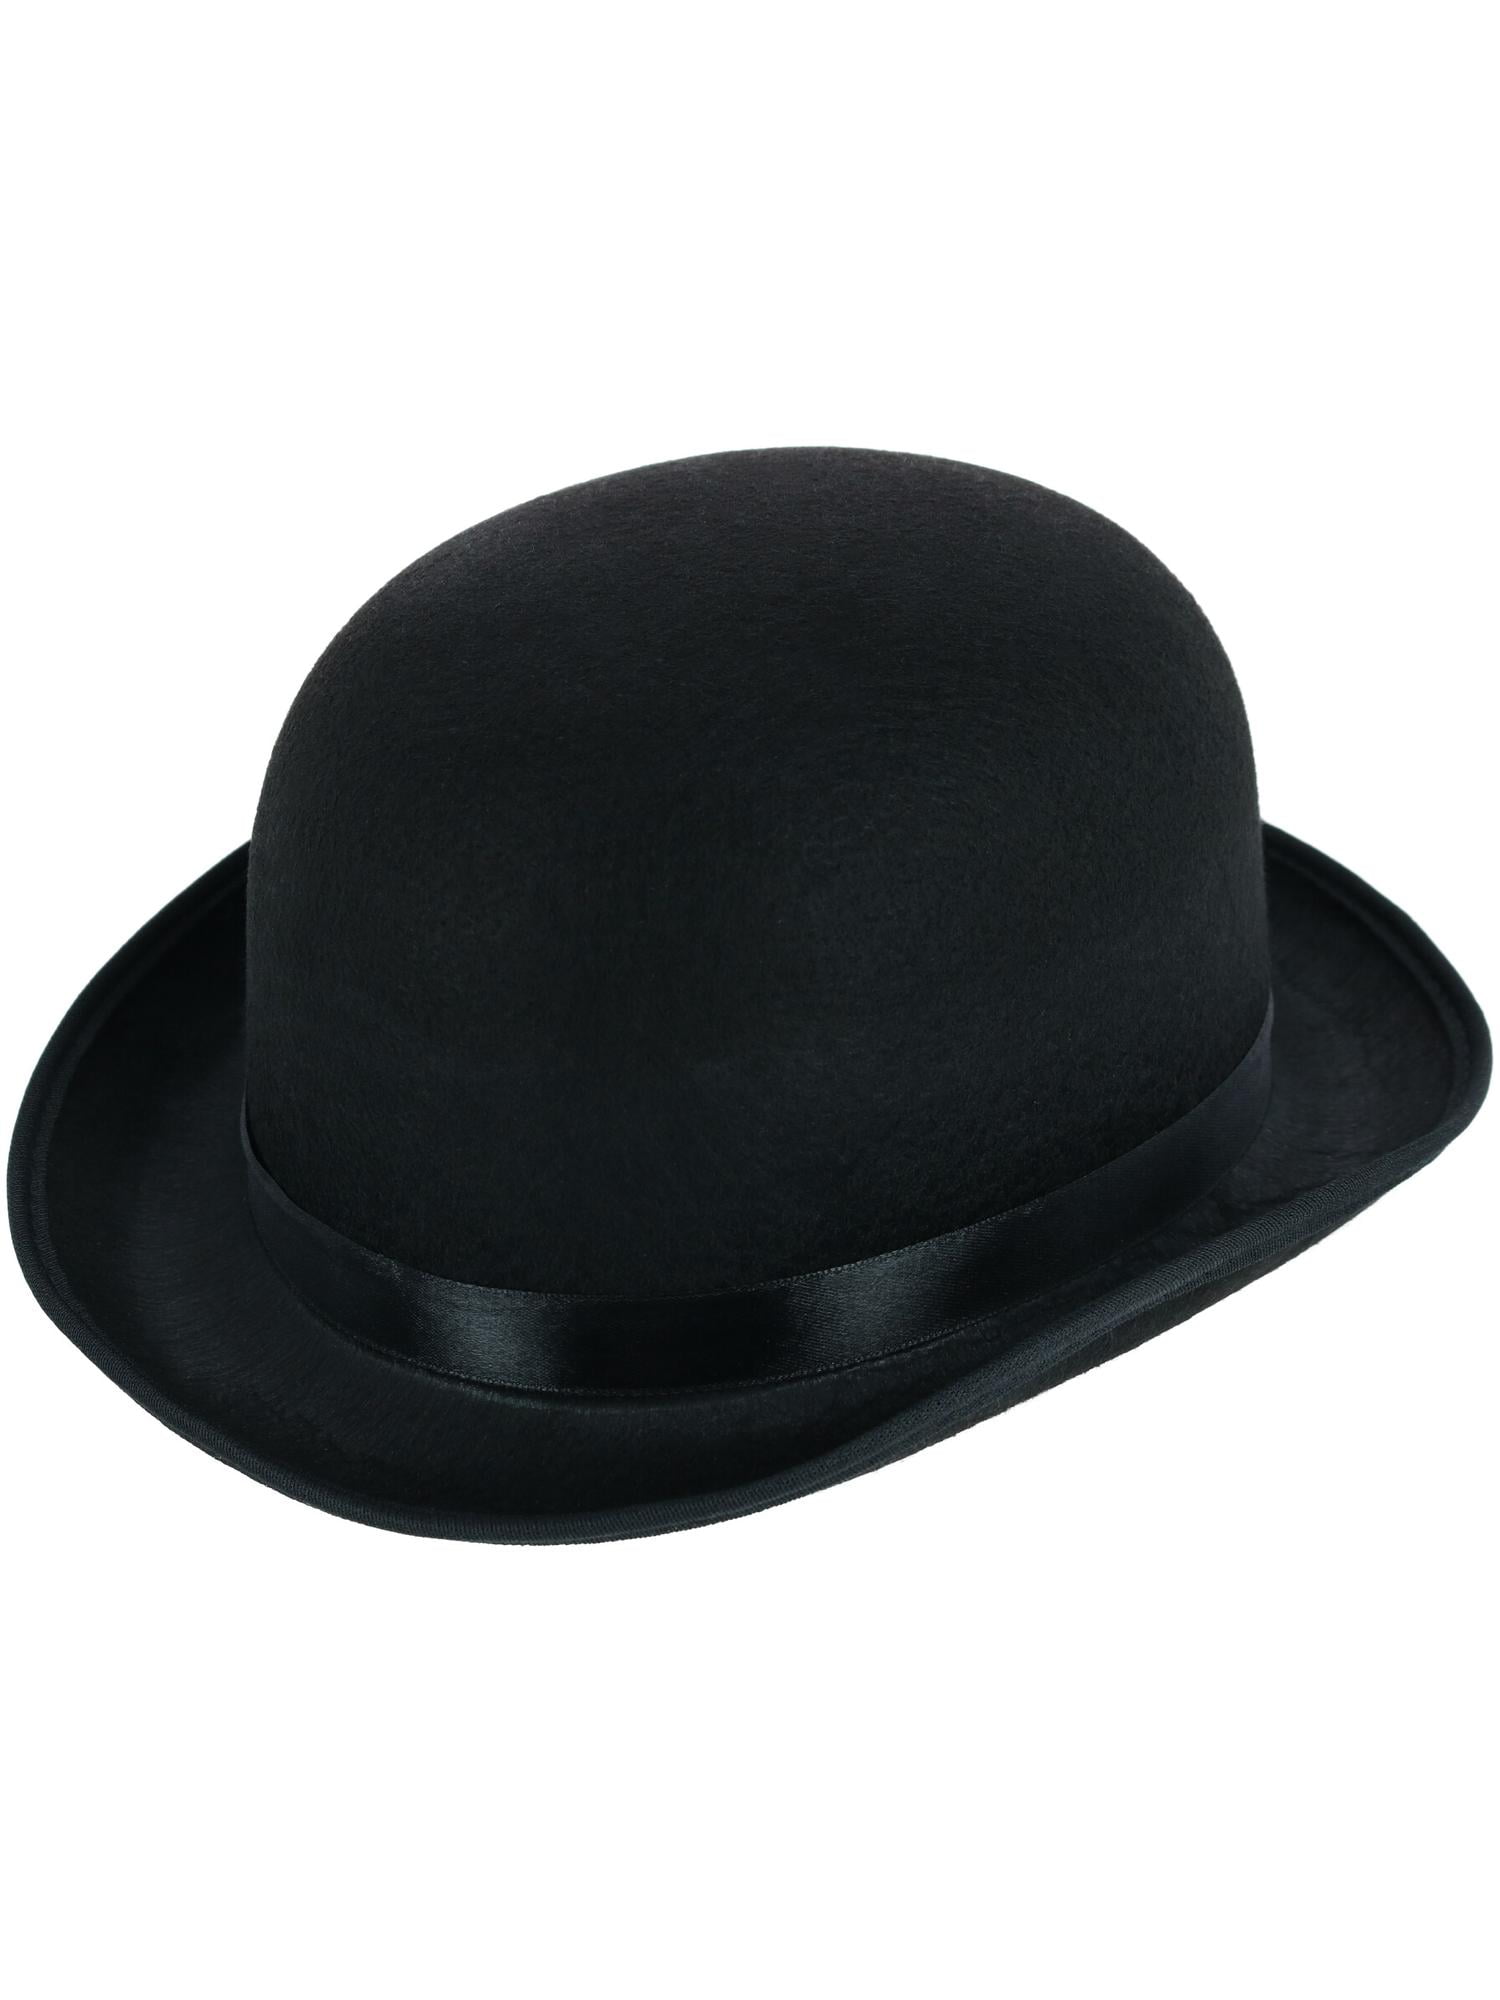 1920S 20'S BLACK SATIN BOWLER DERBY HAT GANGSTER COSTUMES HAT COKE HAT STEAMPUNK 